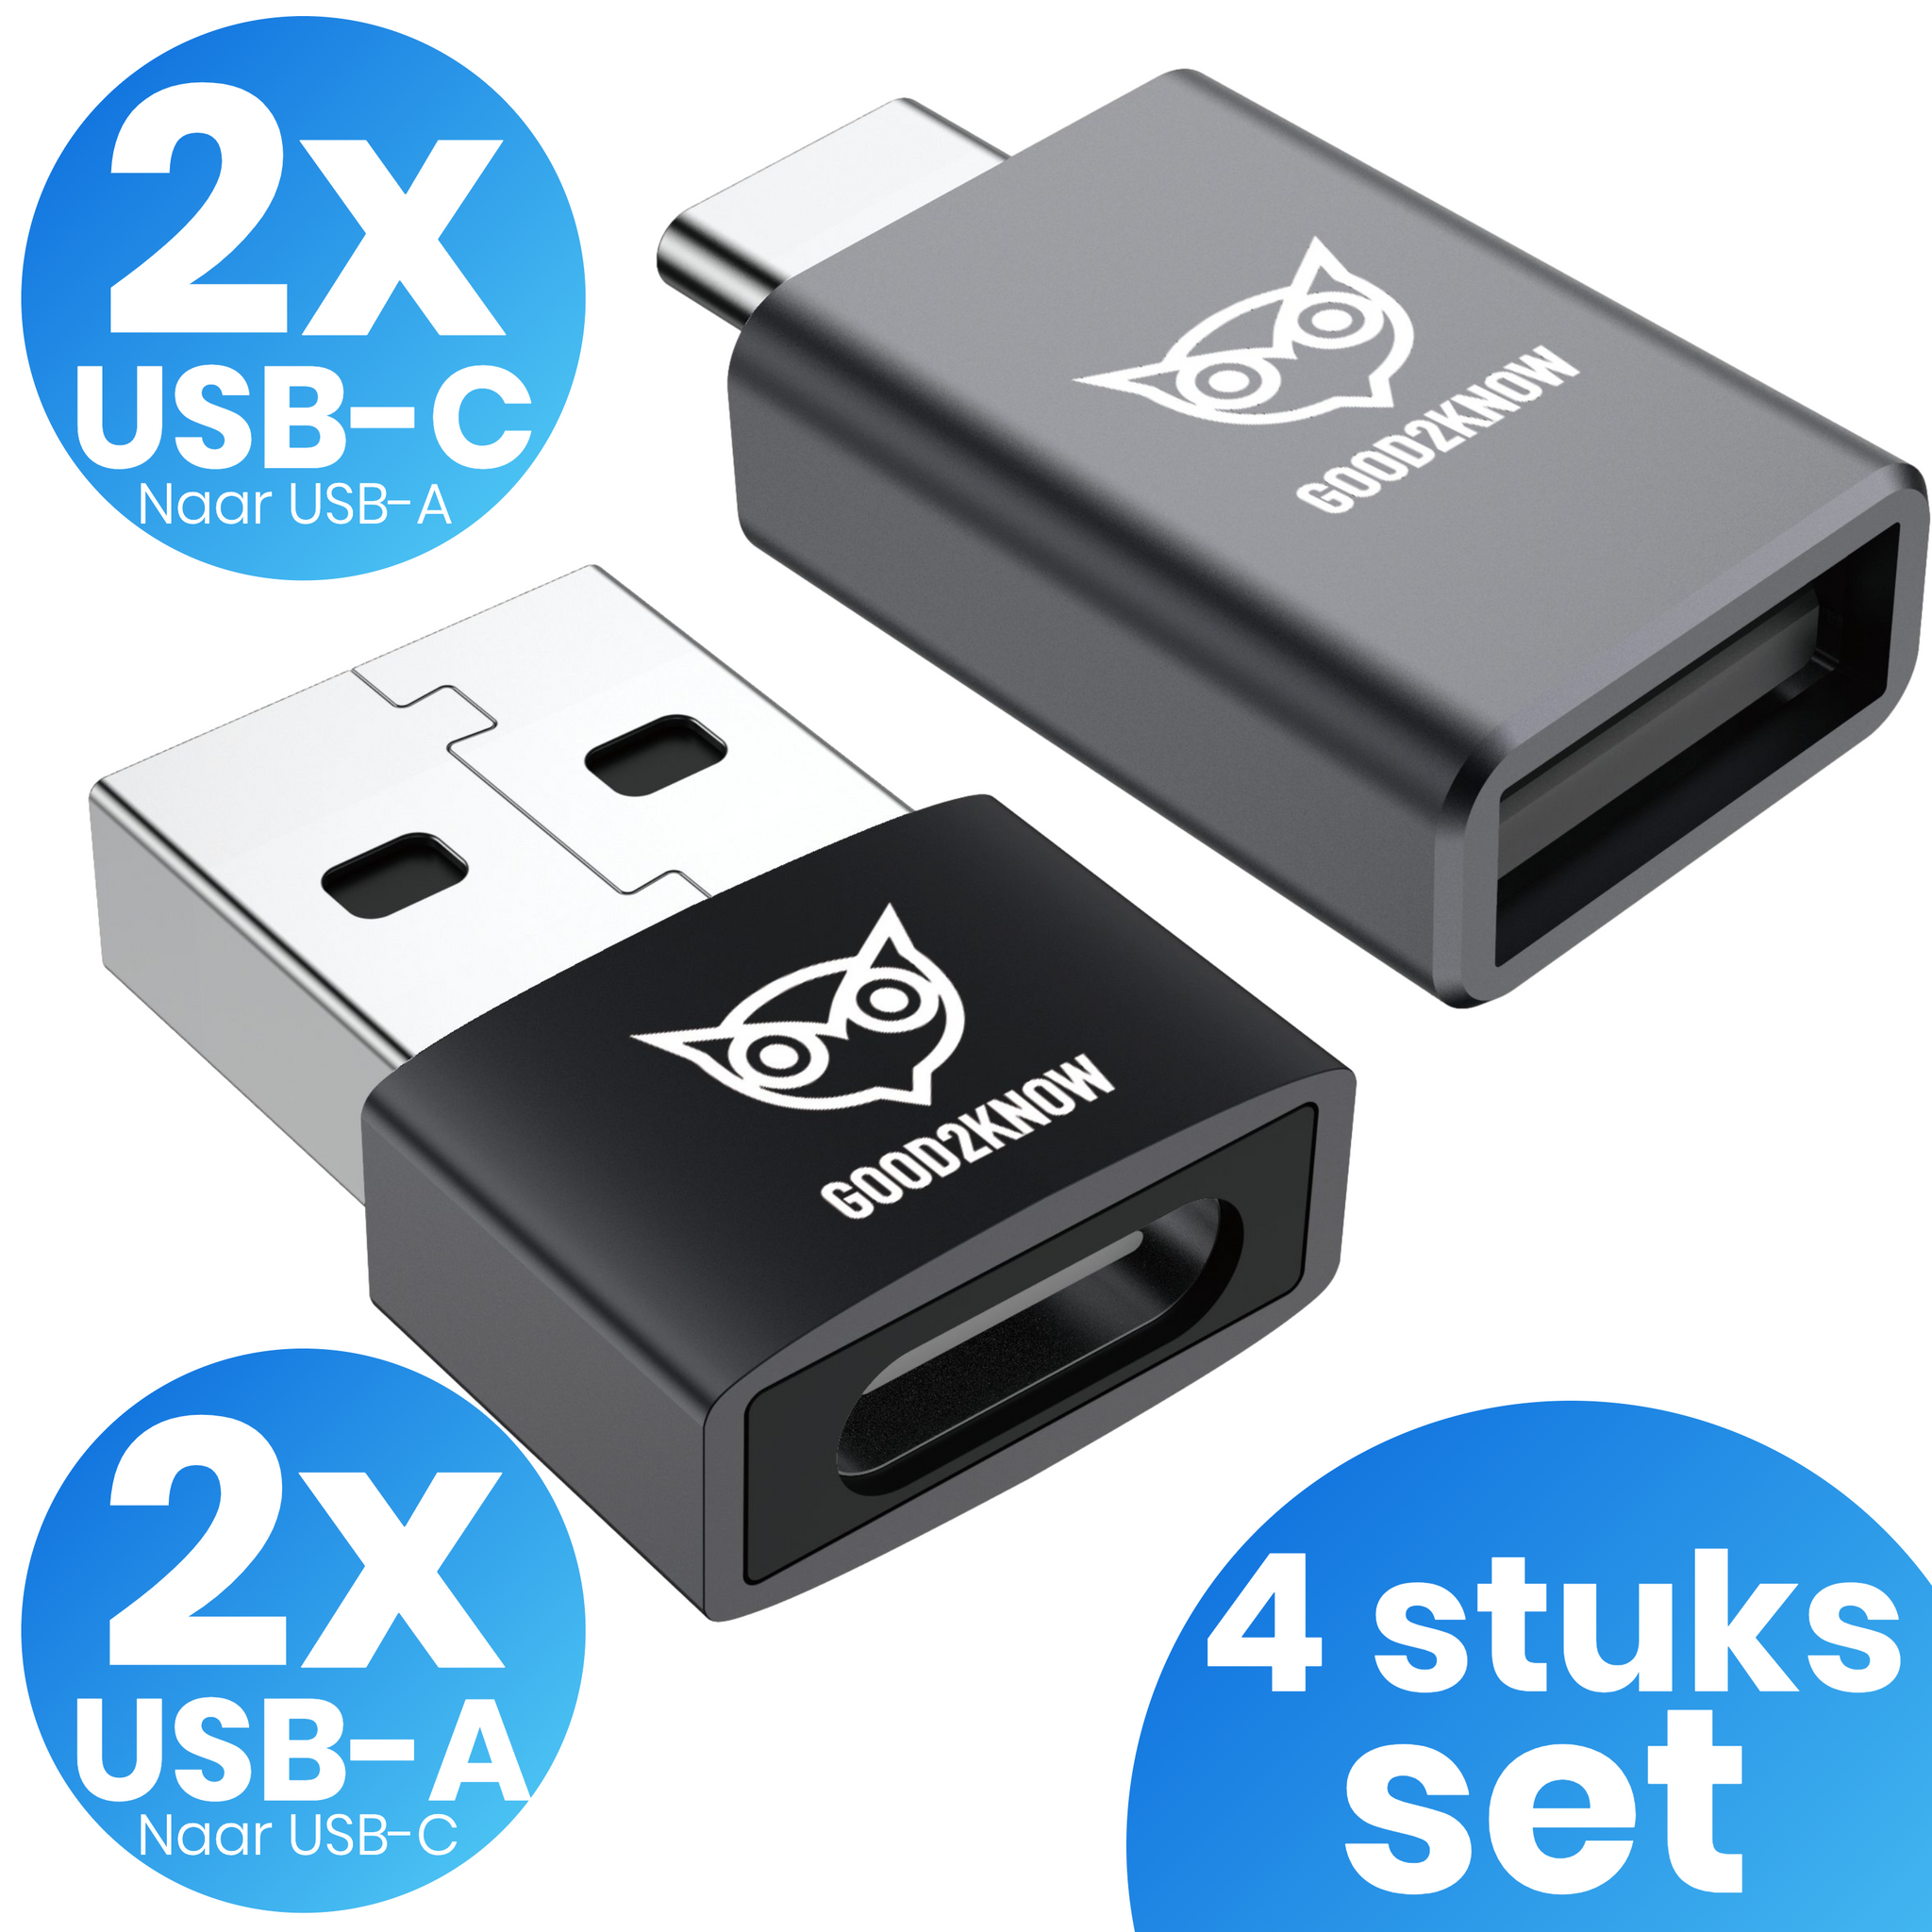 USB C adapter set - USB A adapter set - 4 stuks set - USB 2.0 - USB-C 3.0 - USB C naar USB A - USB A naar USB C